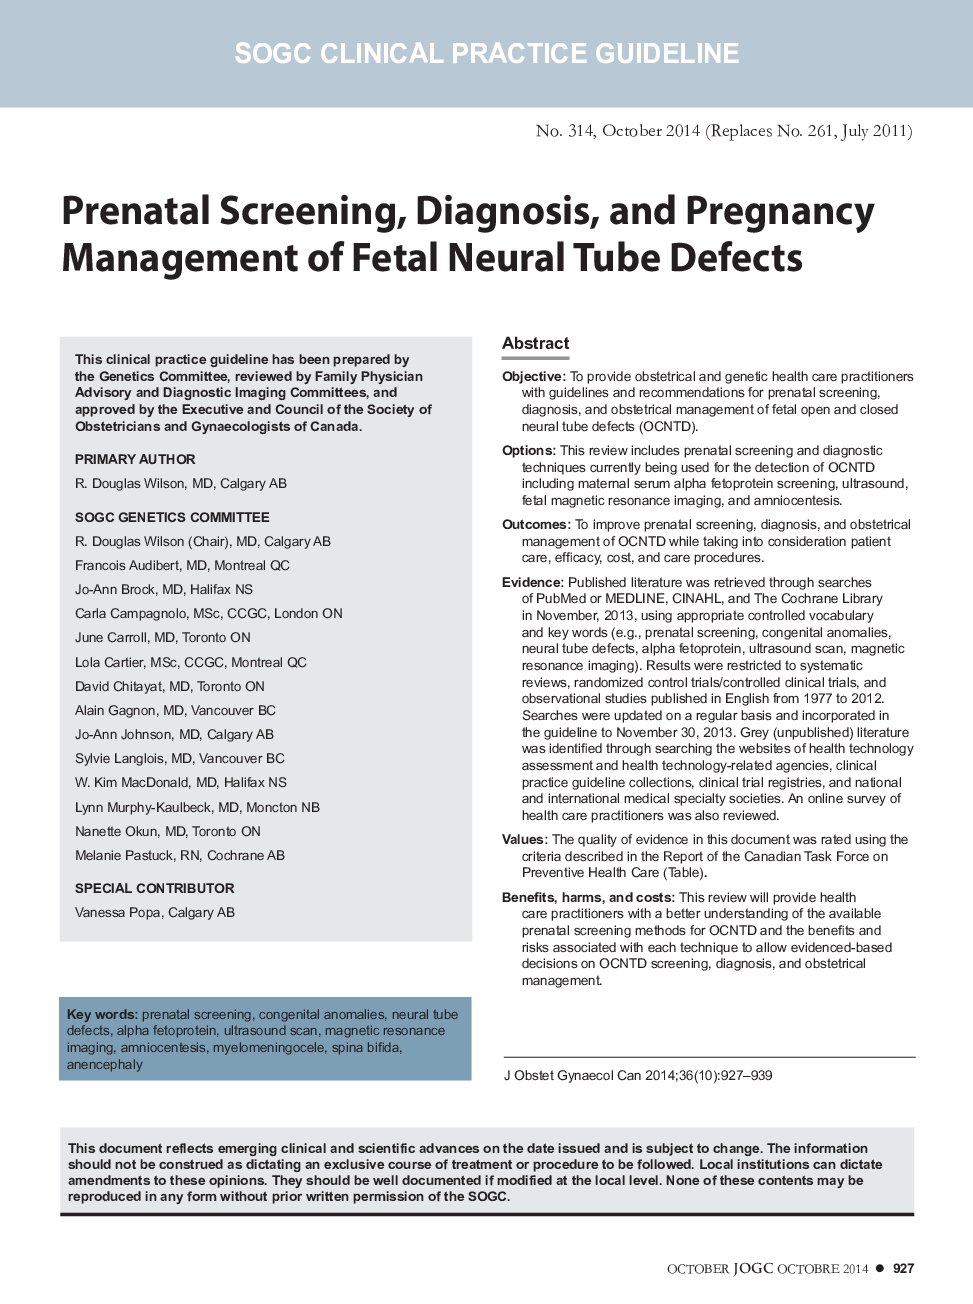 Prenatal Screening, Diagnosis, and Pregnancy Management of Fetal Neural Tube Defects